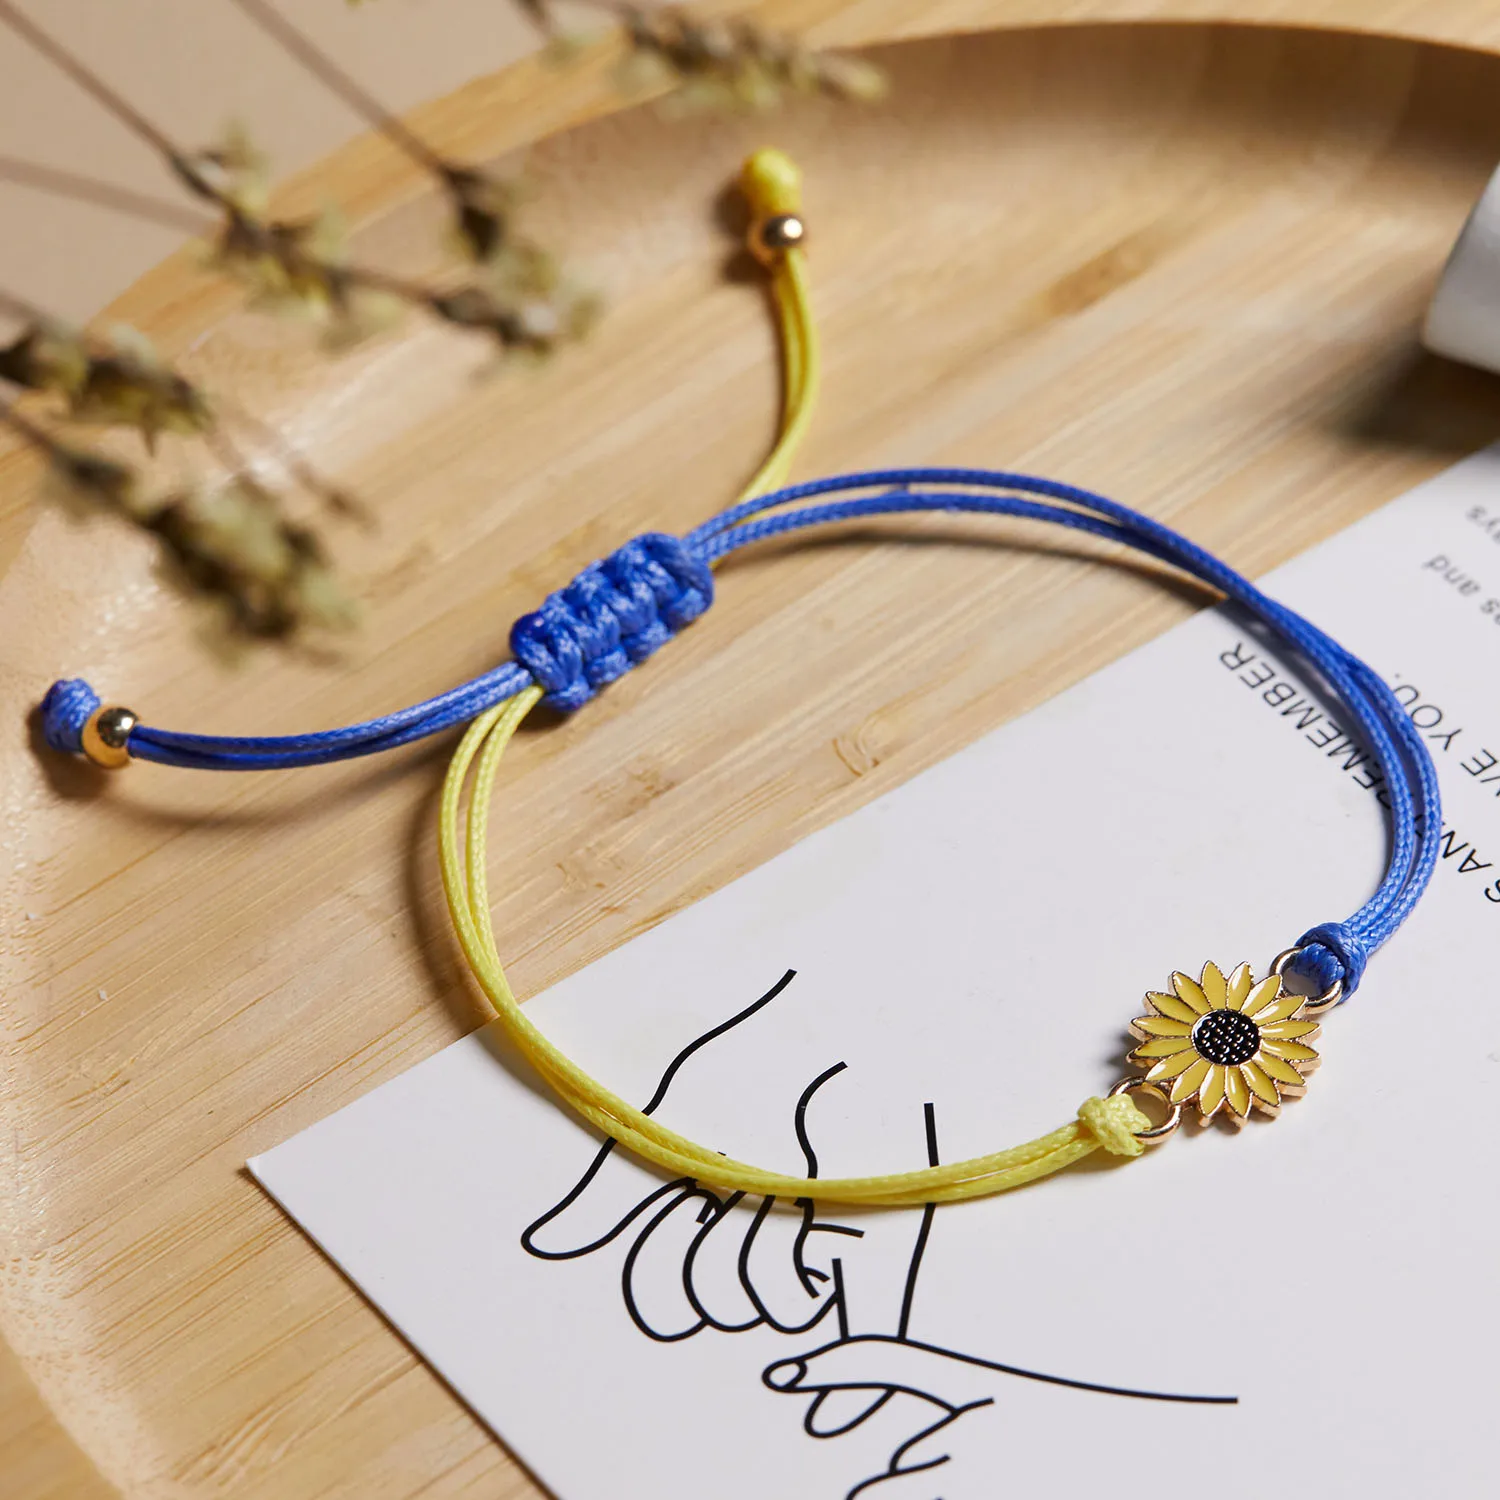 

New Sunflower Handmade Braided Bracelets For Women Girls Blue Yellow Rope Woven Adjustable Charm Friendship Bangle Jewelry Gifts